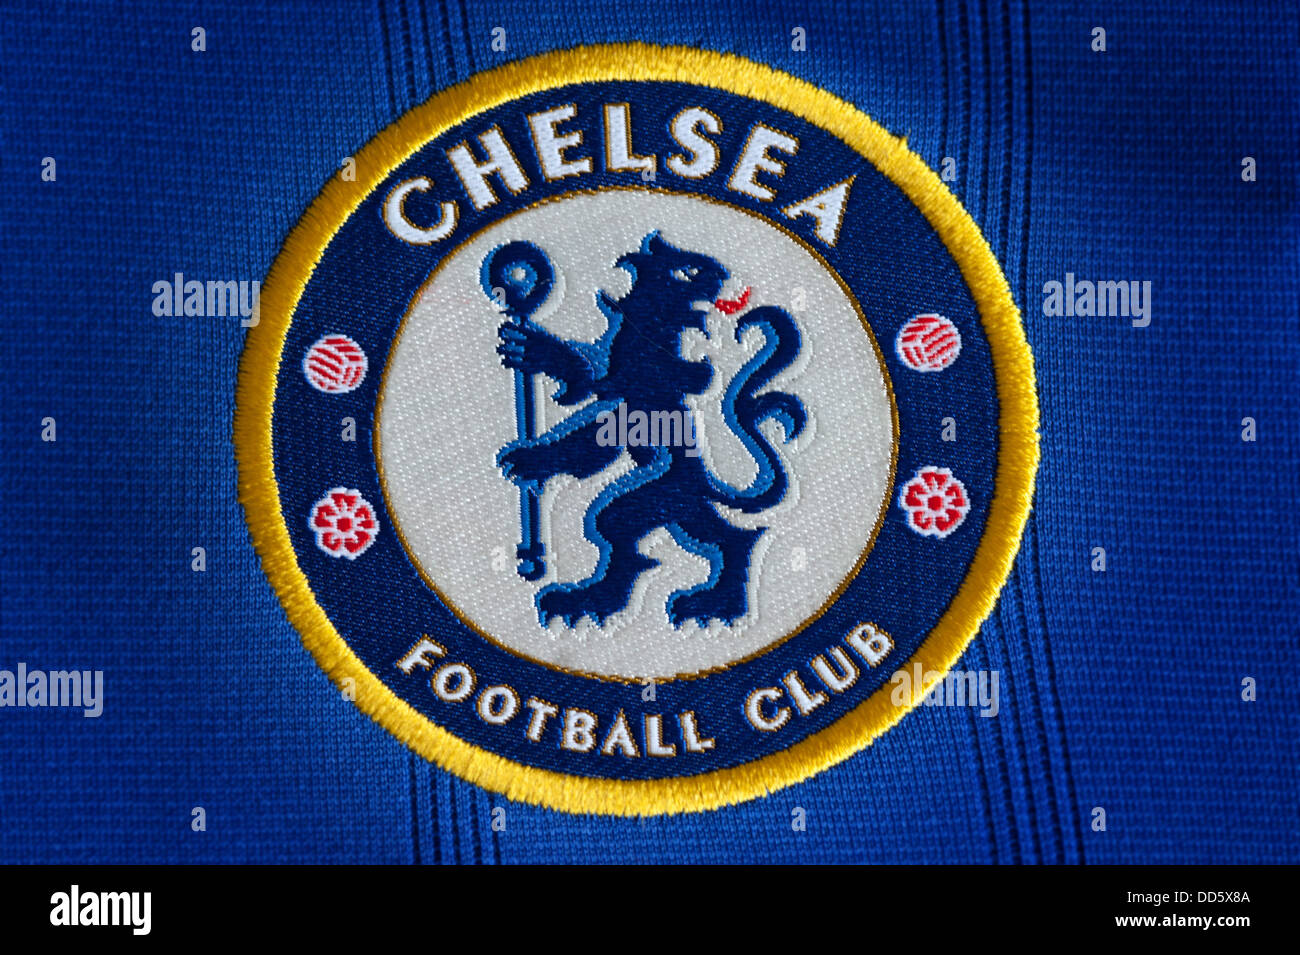 Chelsea FC Club Crest Stock Photo